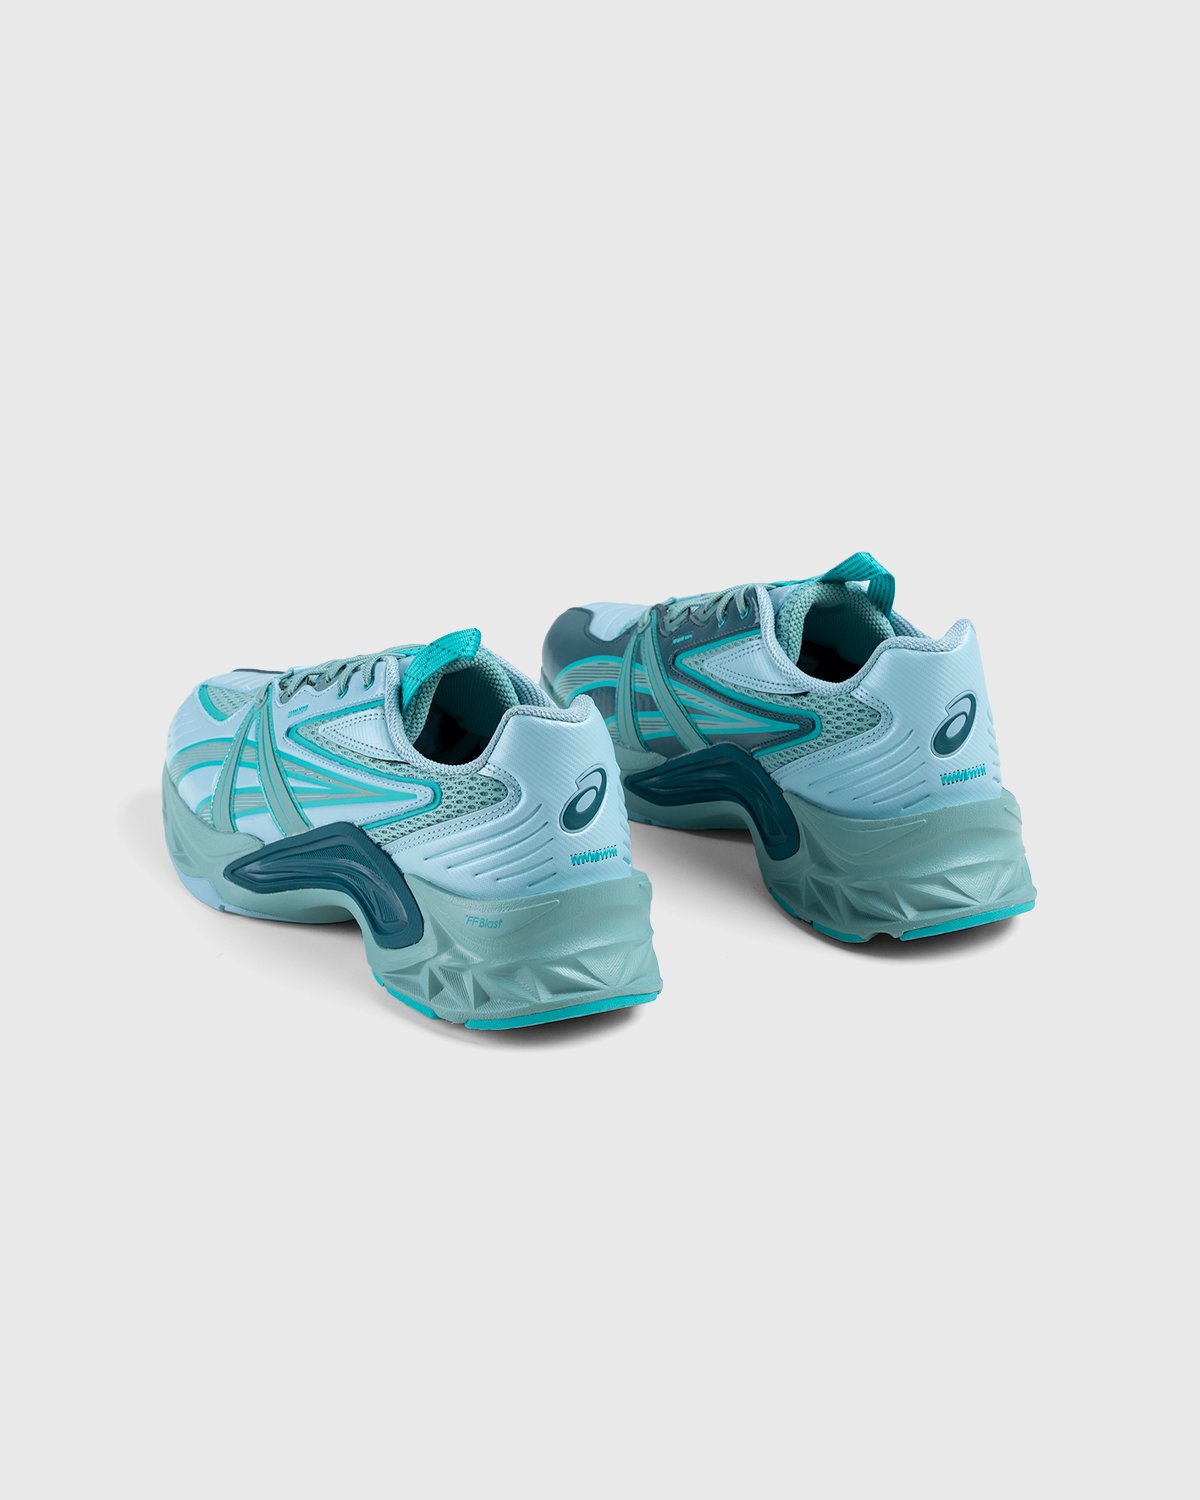 asics - HN2-S Protoblast Evergreen/Shaded Spruce - Footwear - Blue - Image 4